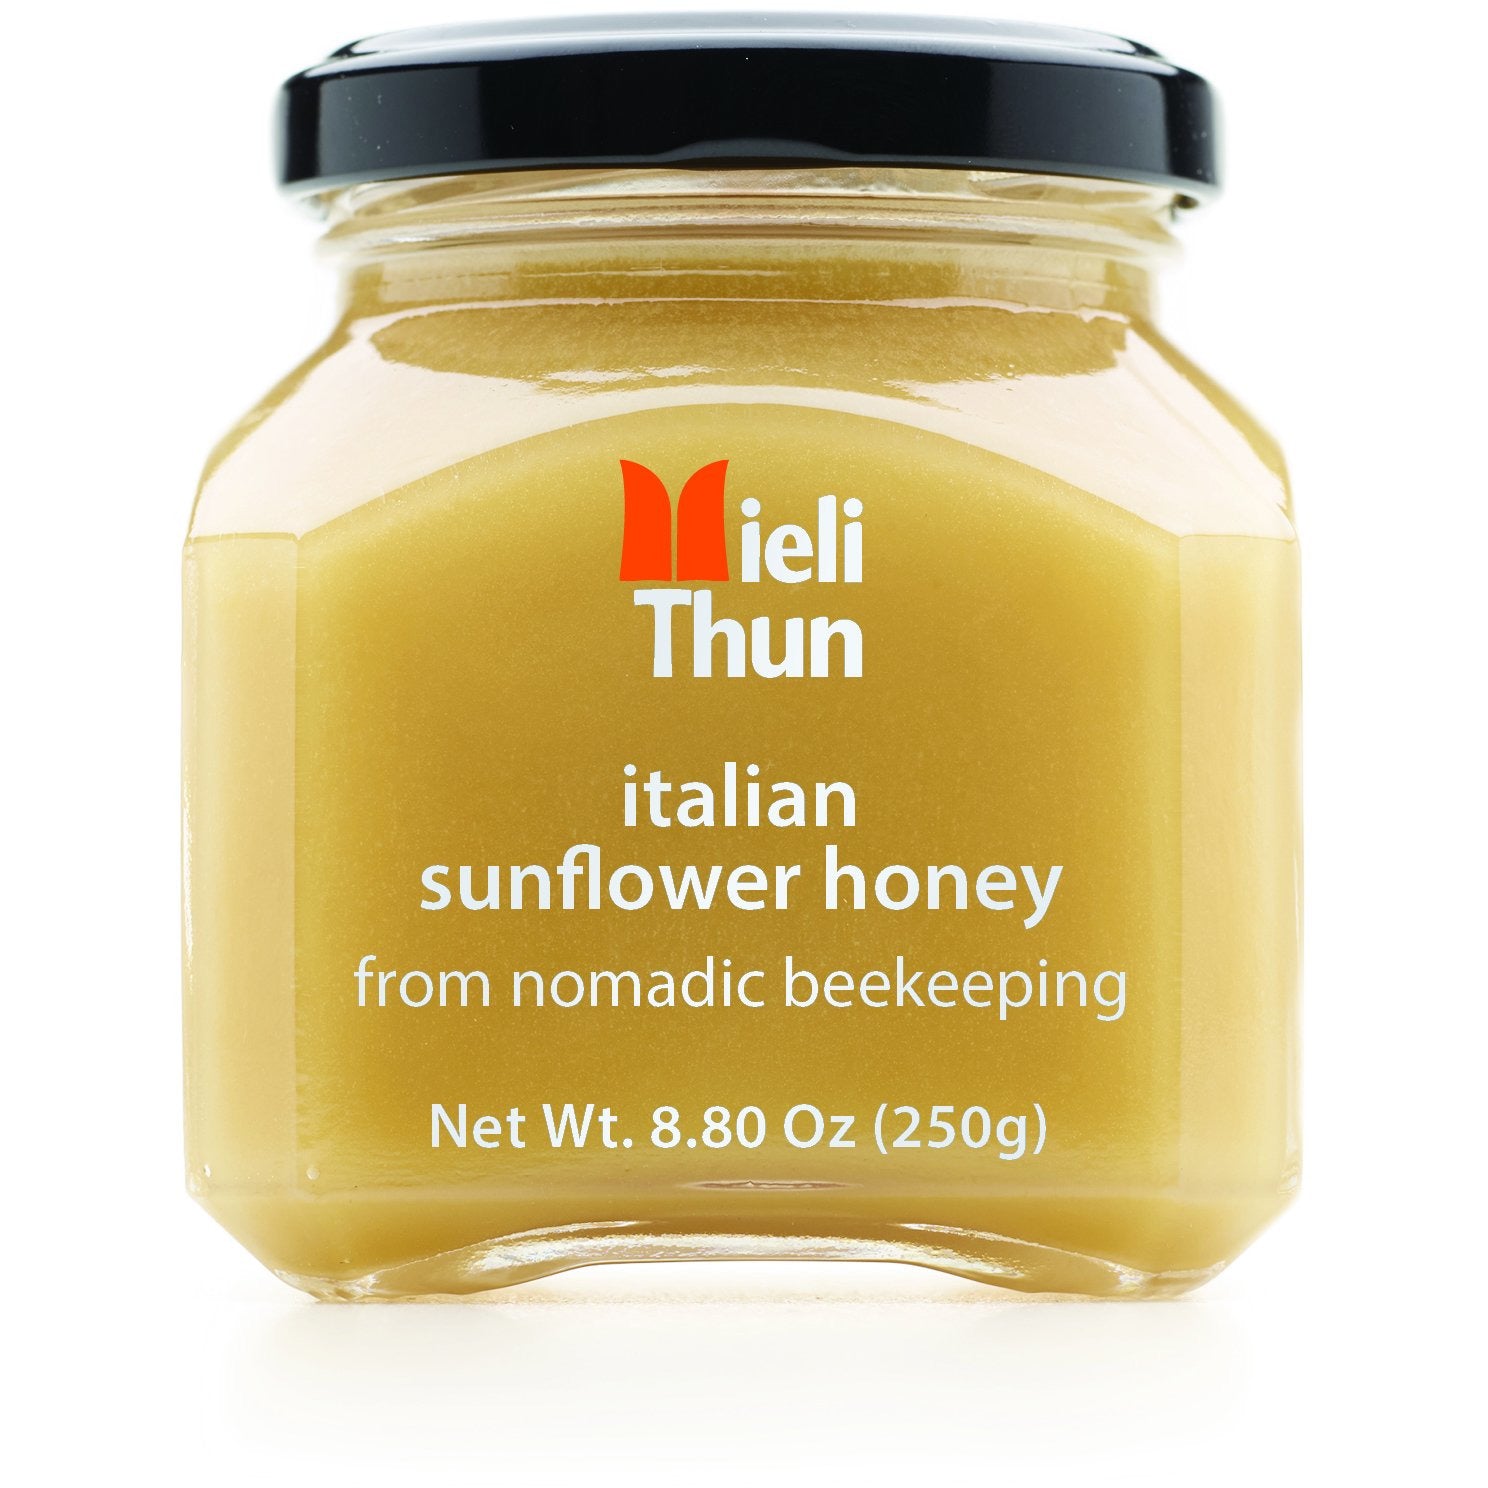 Mieli Thun Sunflower Honey 250g